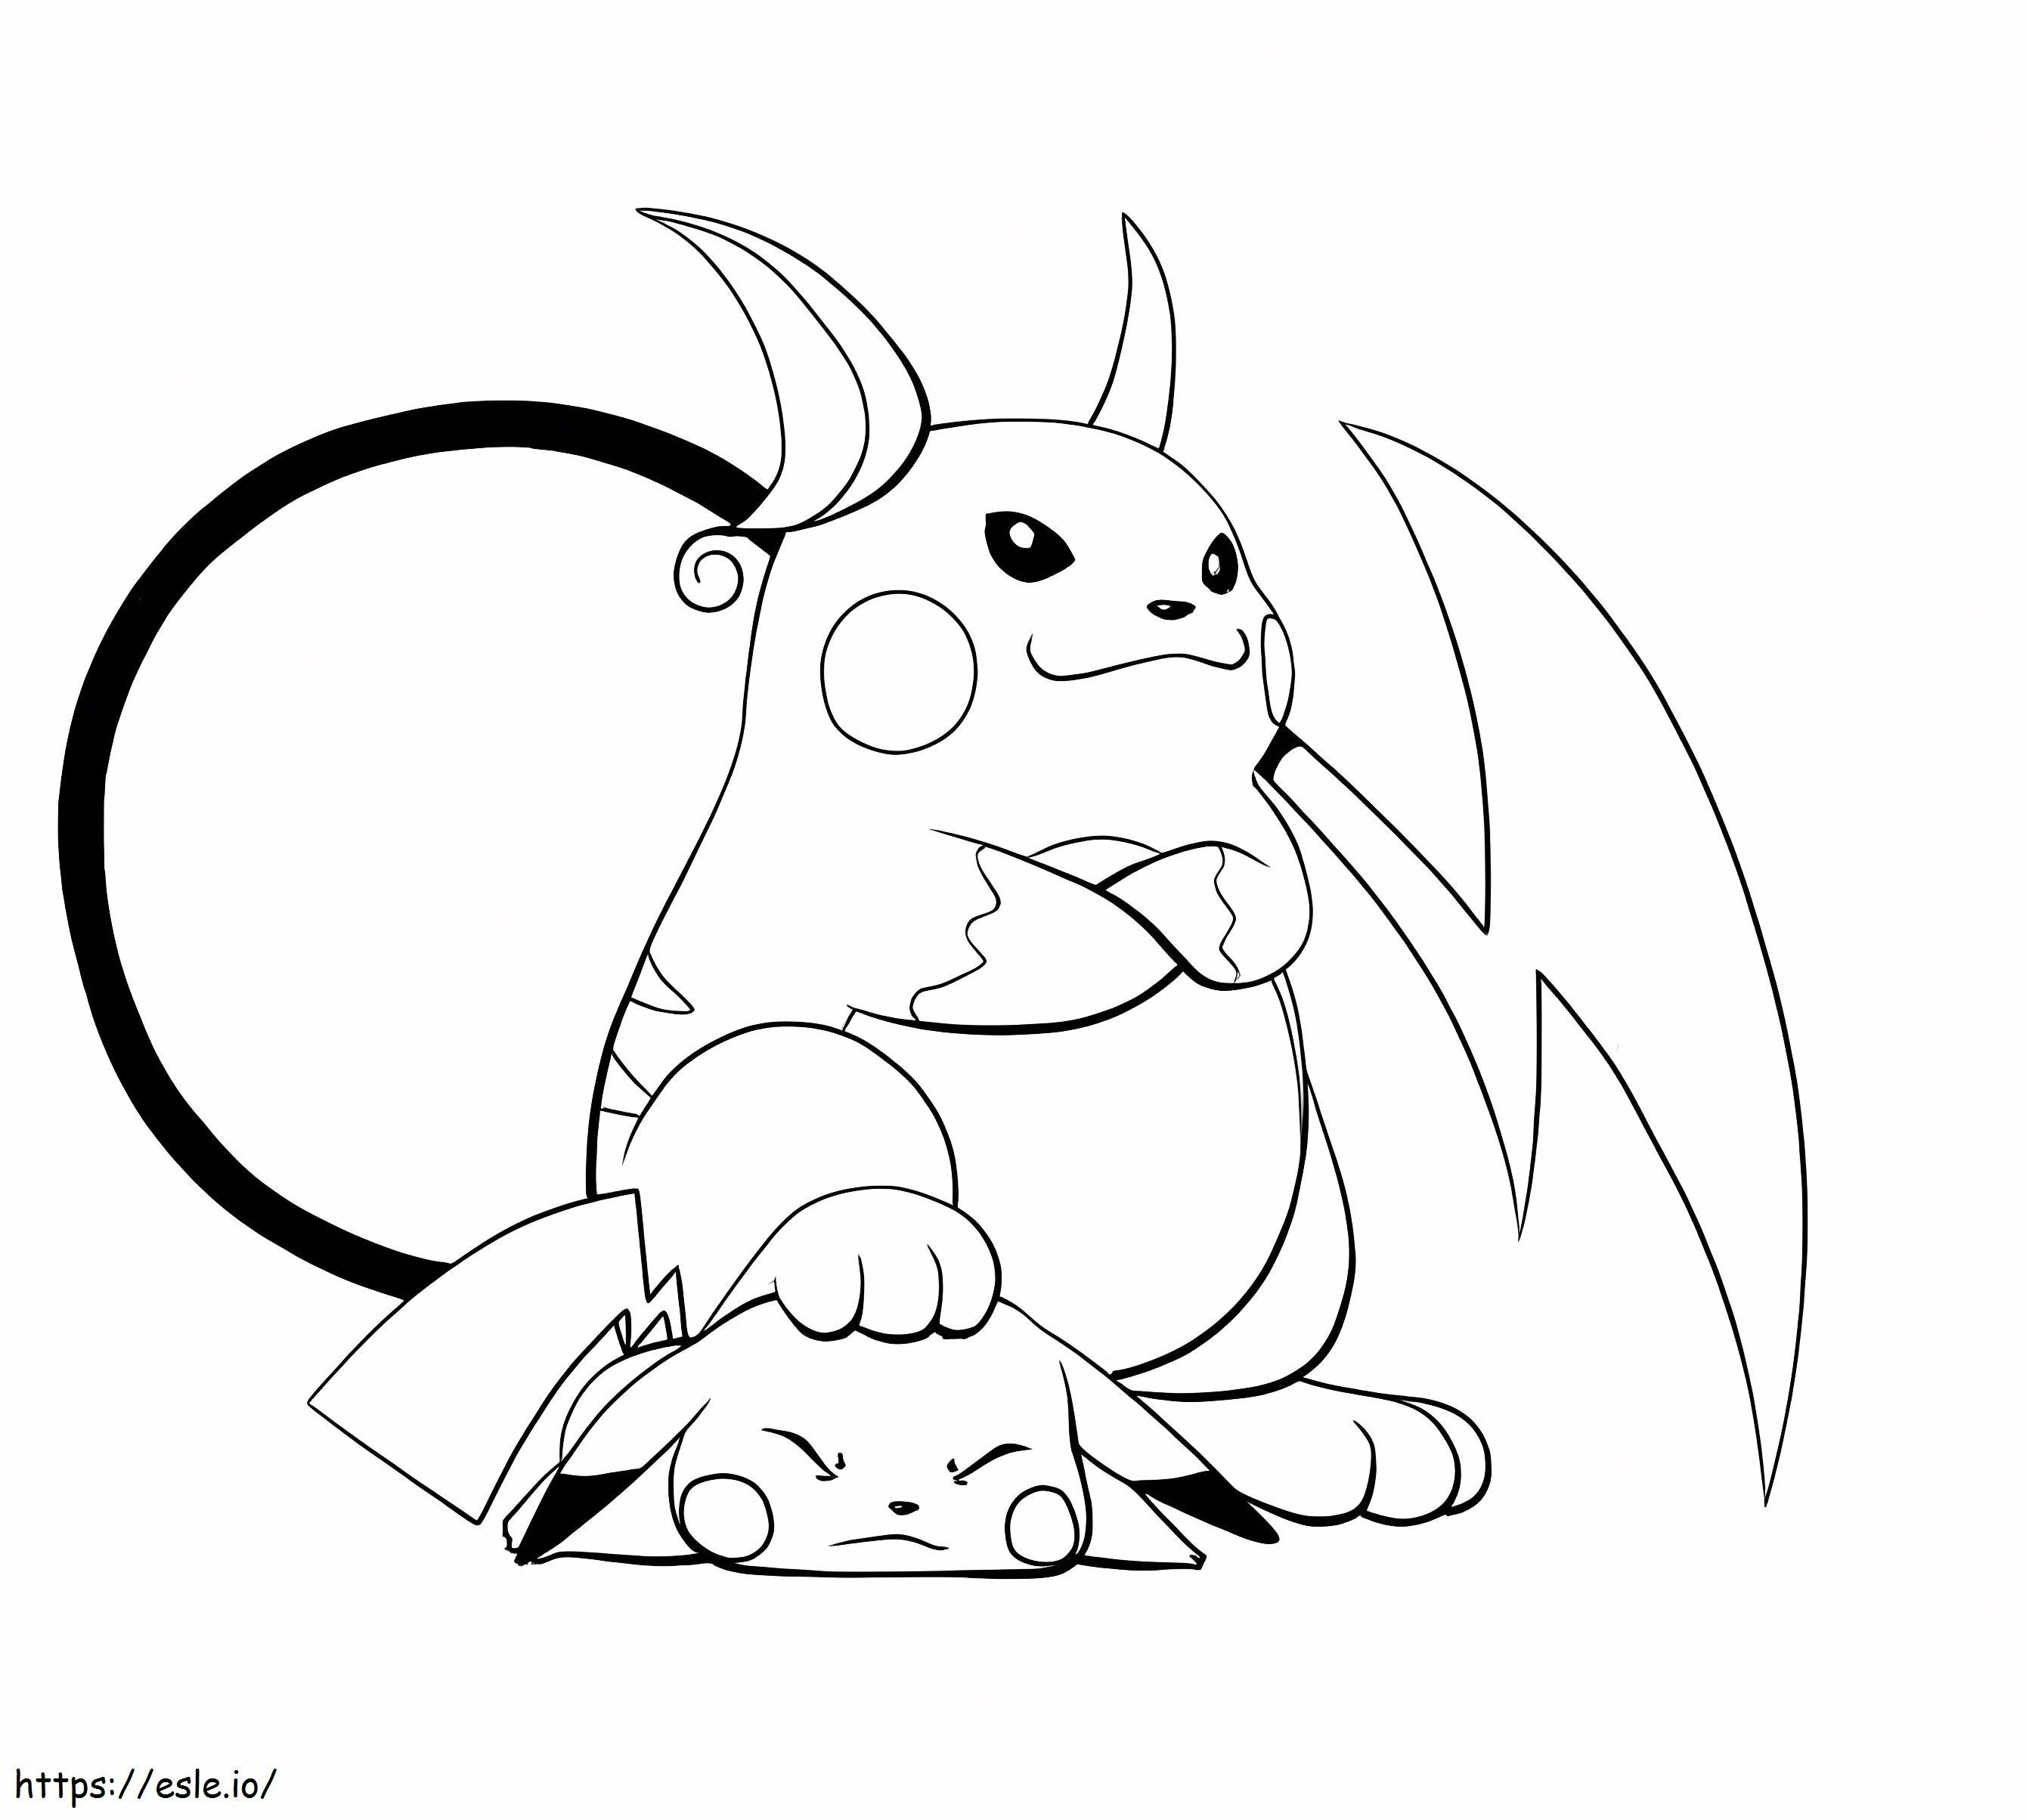 Raichu Y Pikachu coloring page